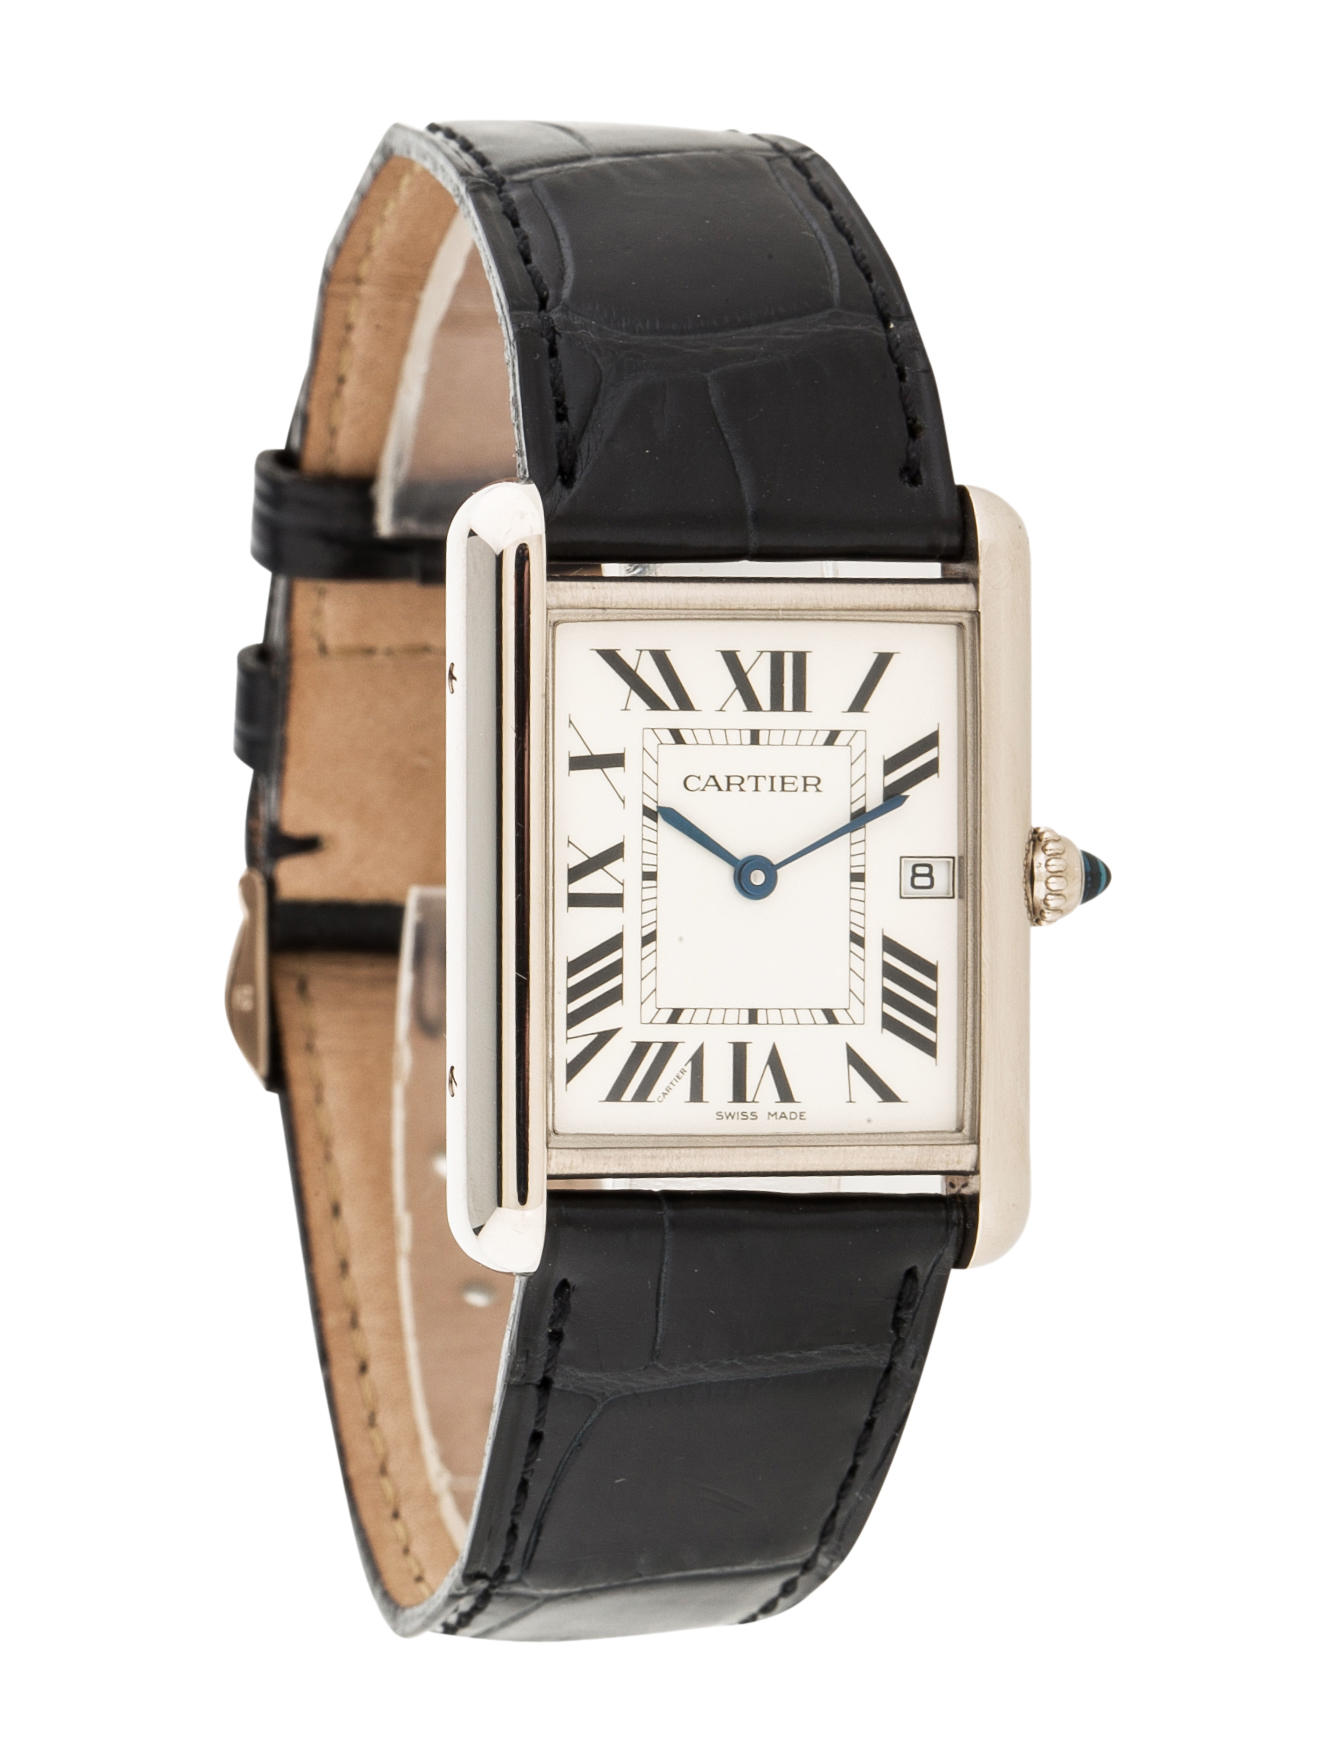 Cartier 18K White Gold Tank Watch